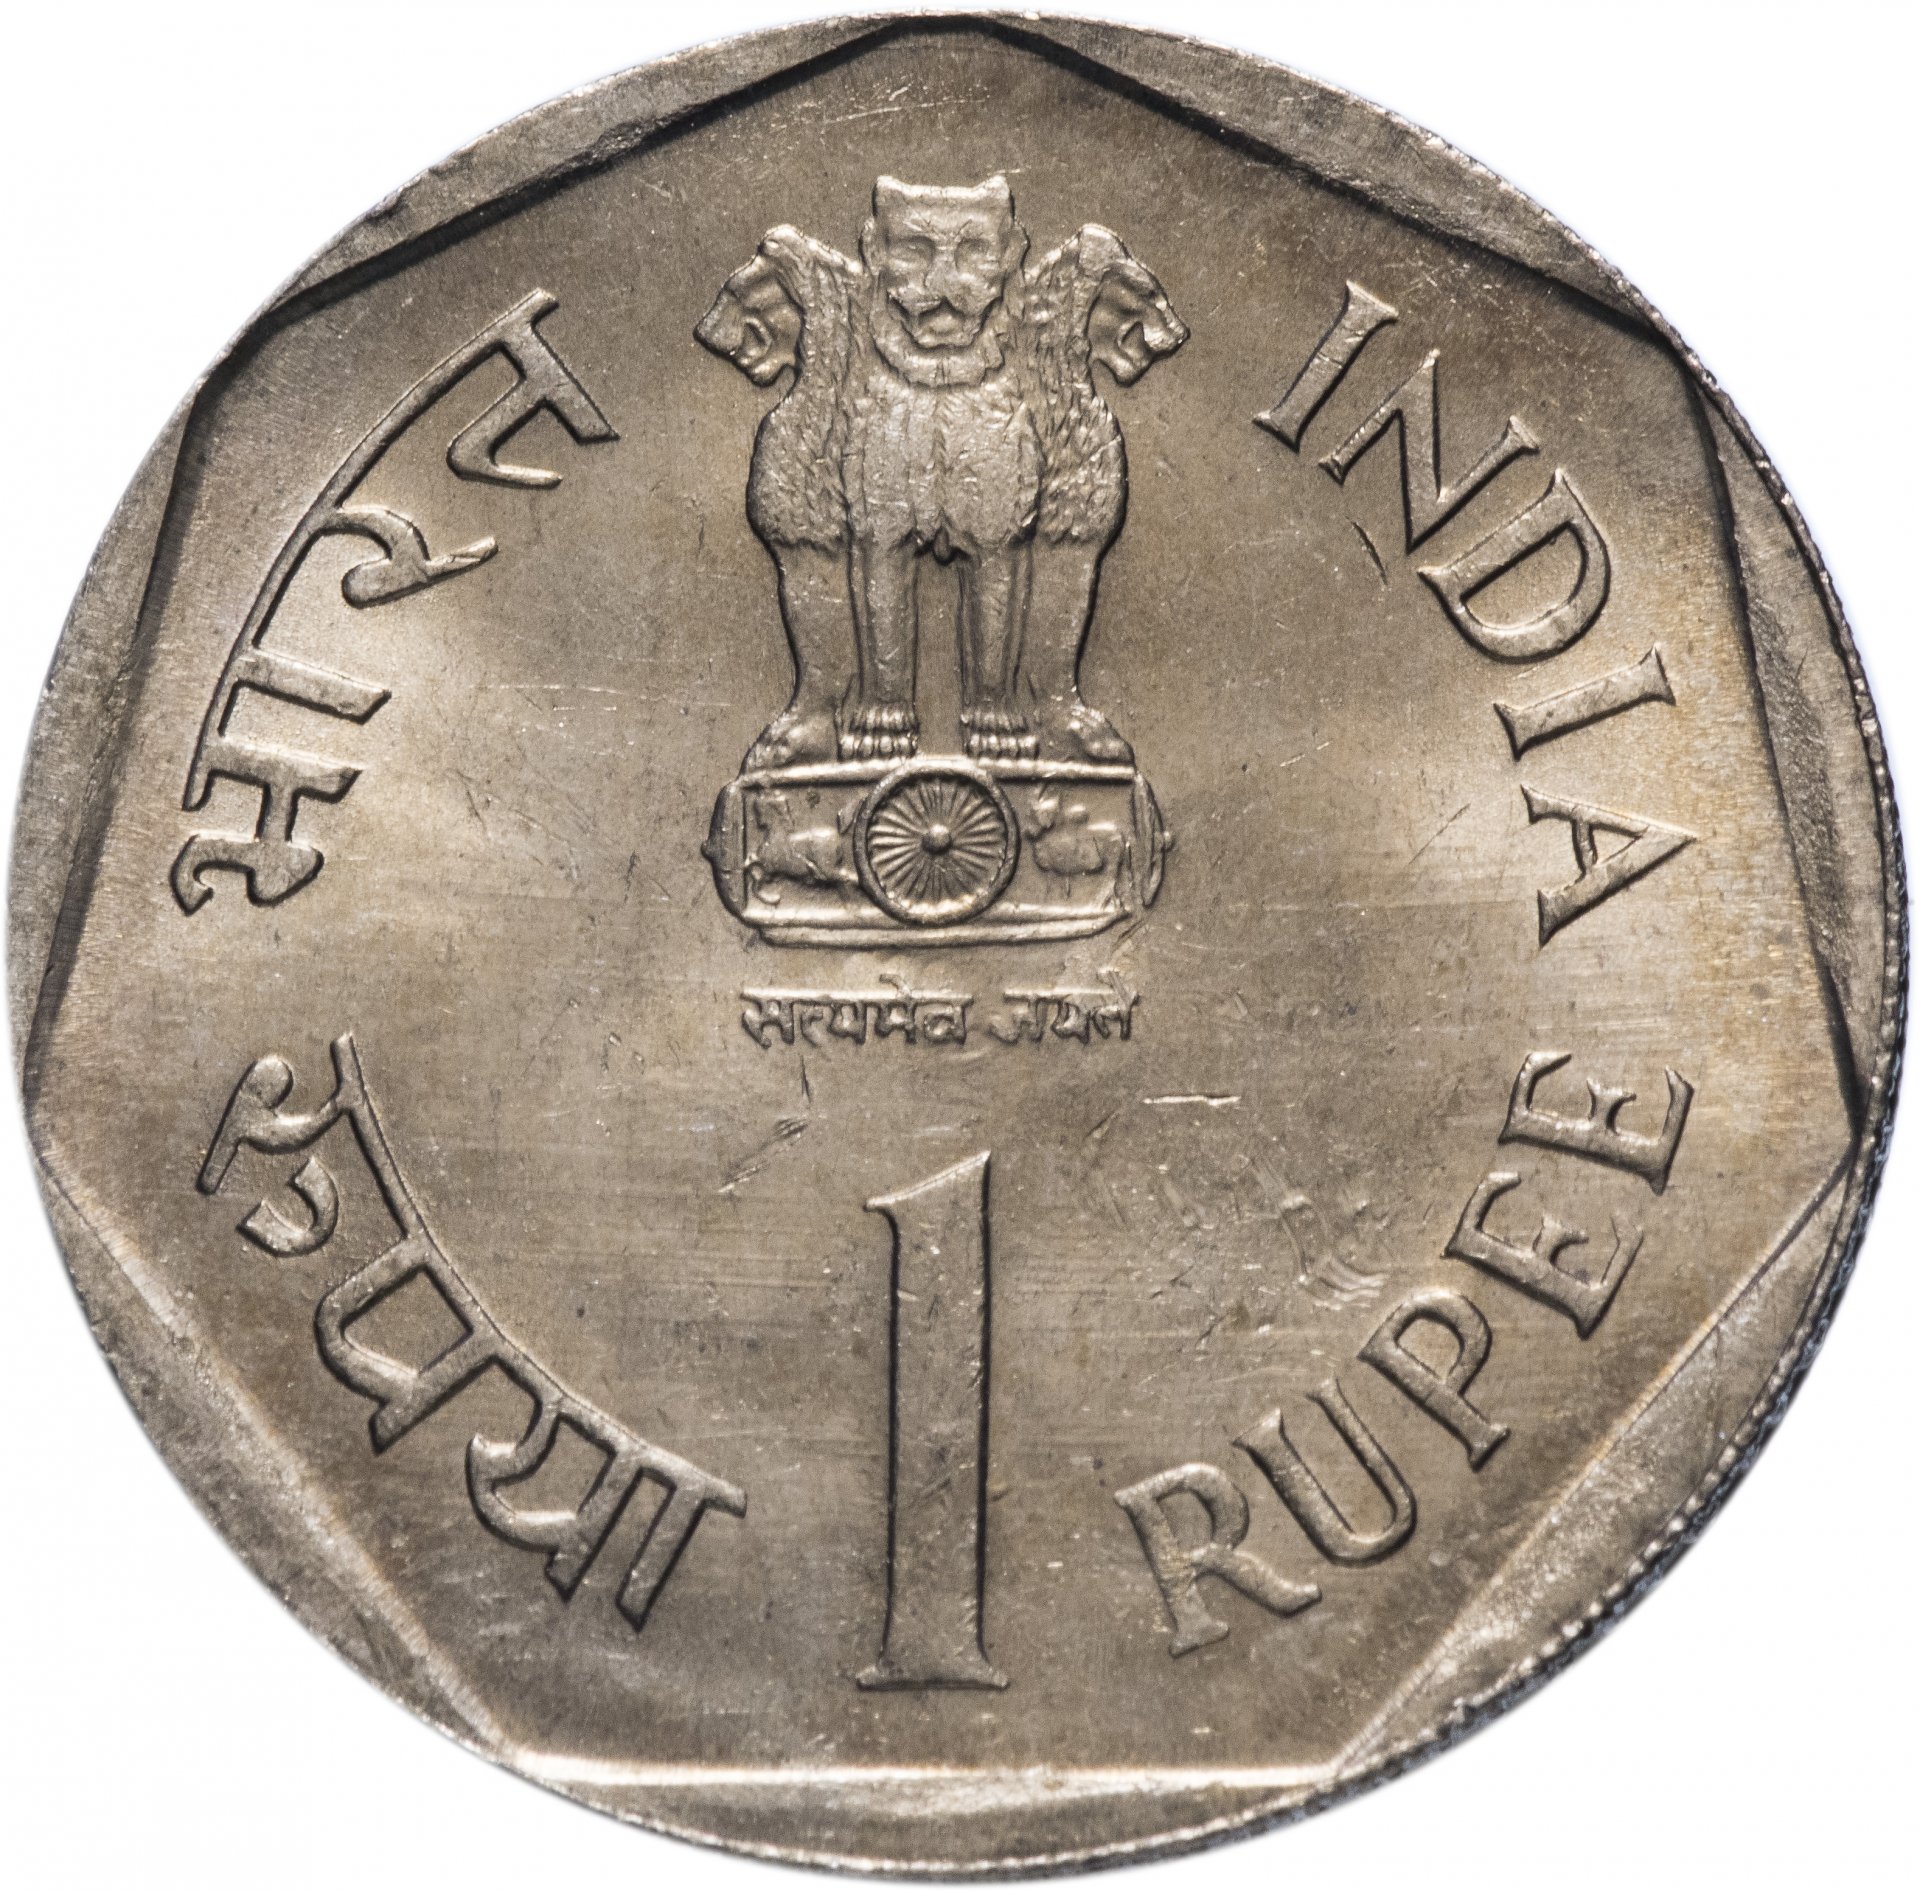 First coins. Монета 1 рупия Индия. Рупи монеты в Индии. Монета one rupee 1. One rupee монета.